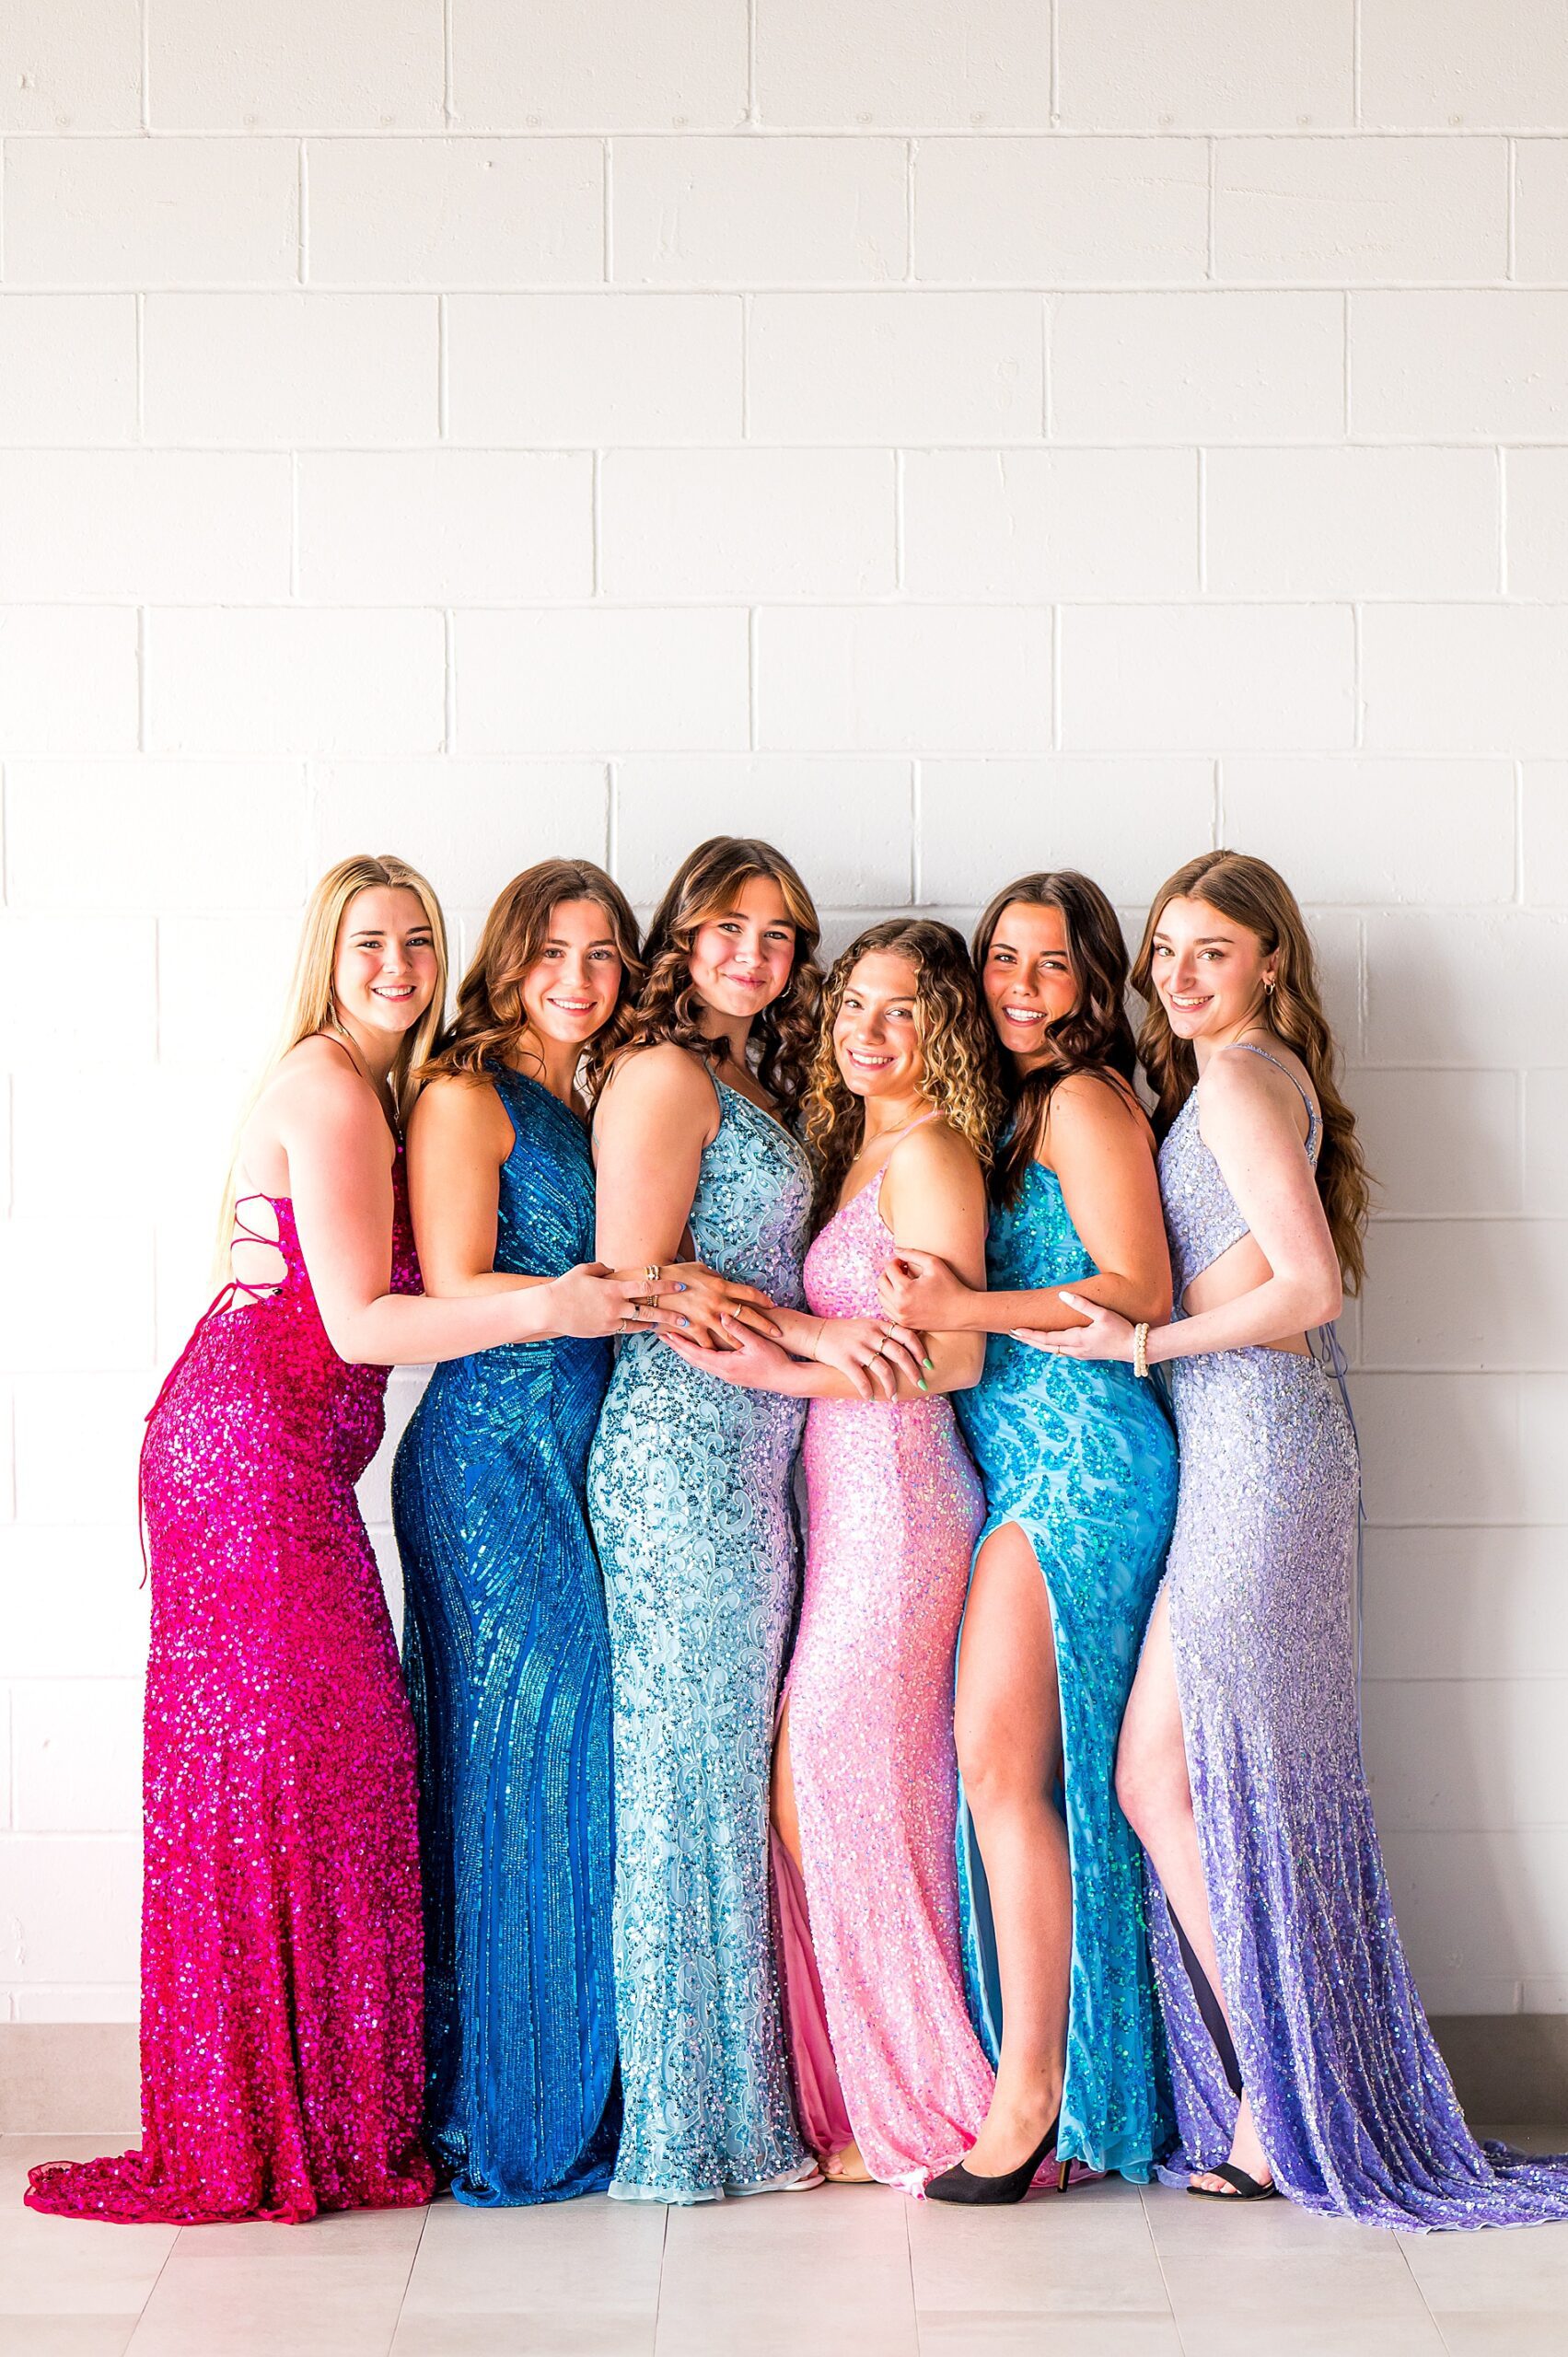 Glamorous Prom-Themed Photoshoot of senior spokesmodel team